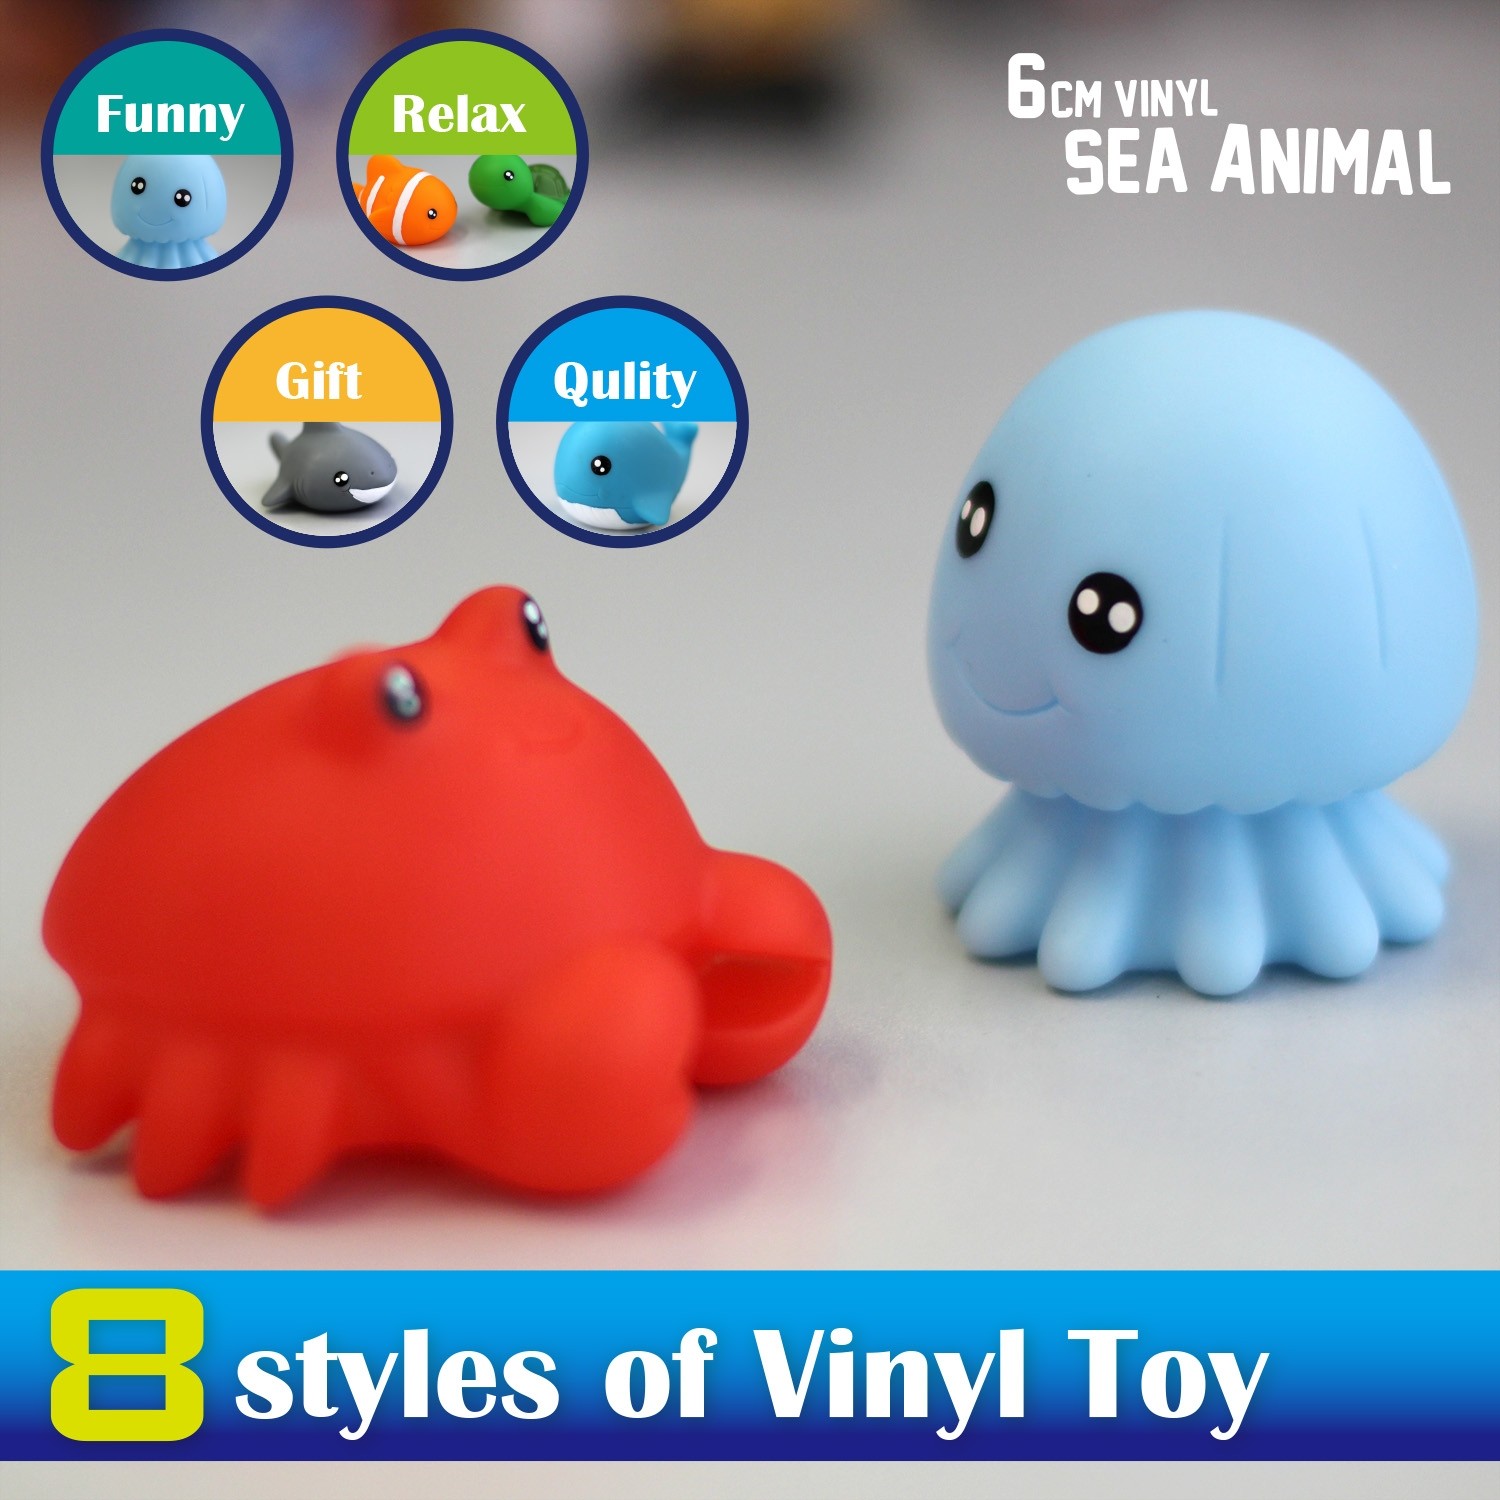 6cm Vinyl Sea Animal